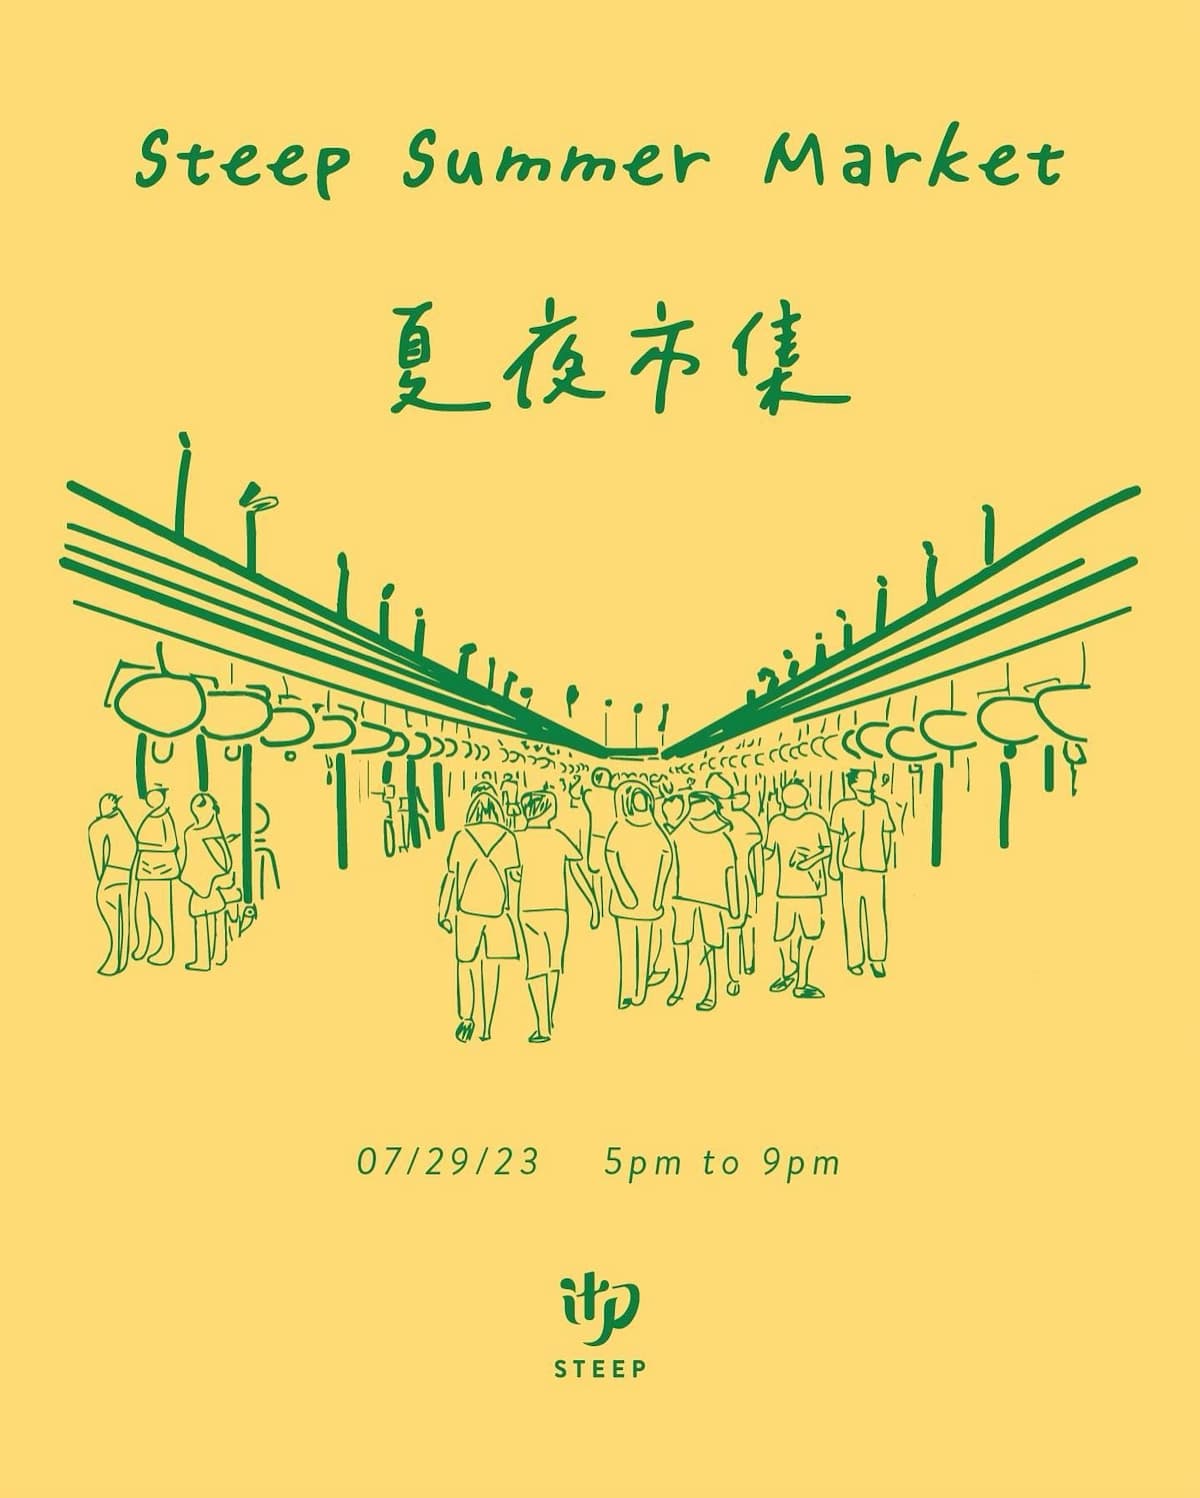 Steep Summer Market